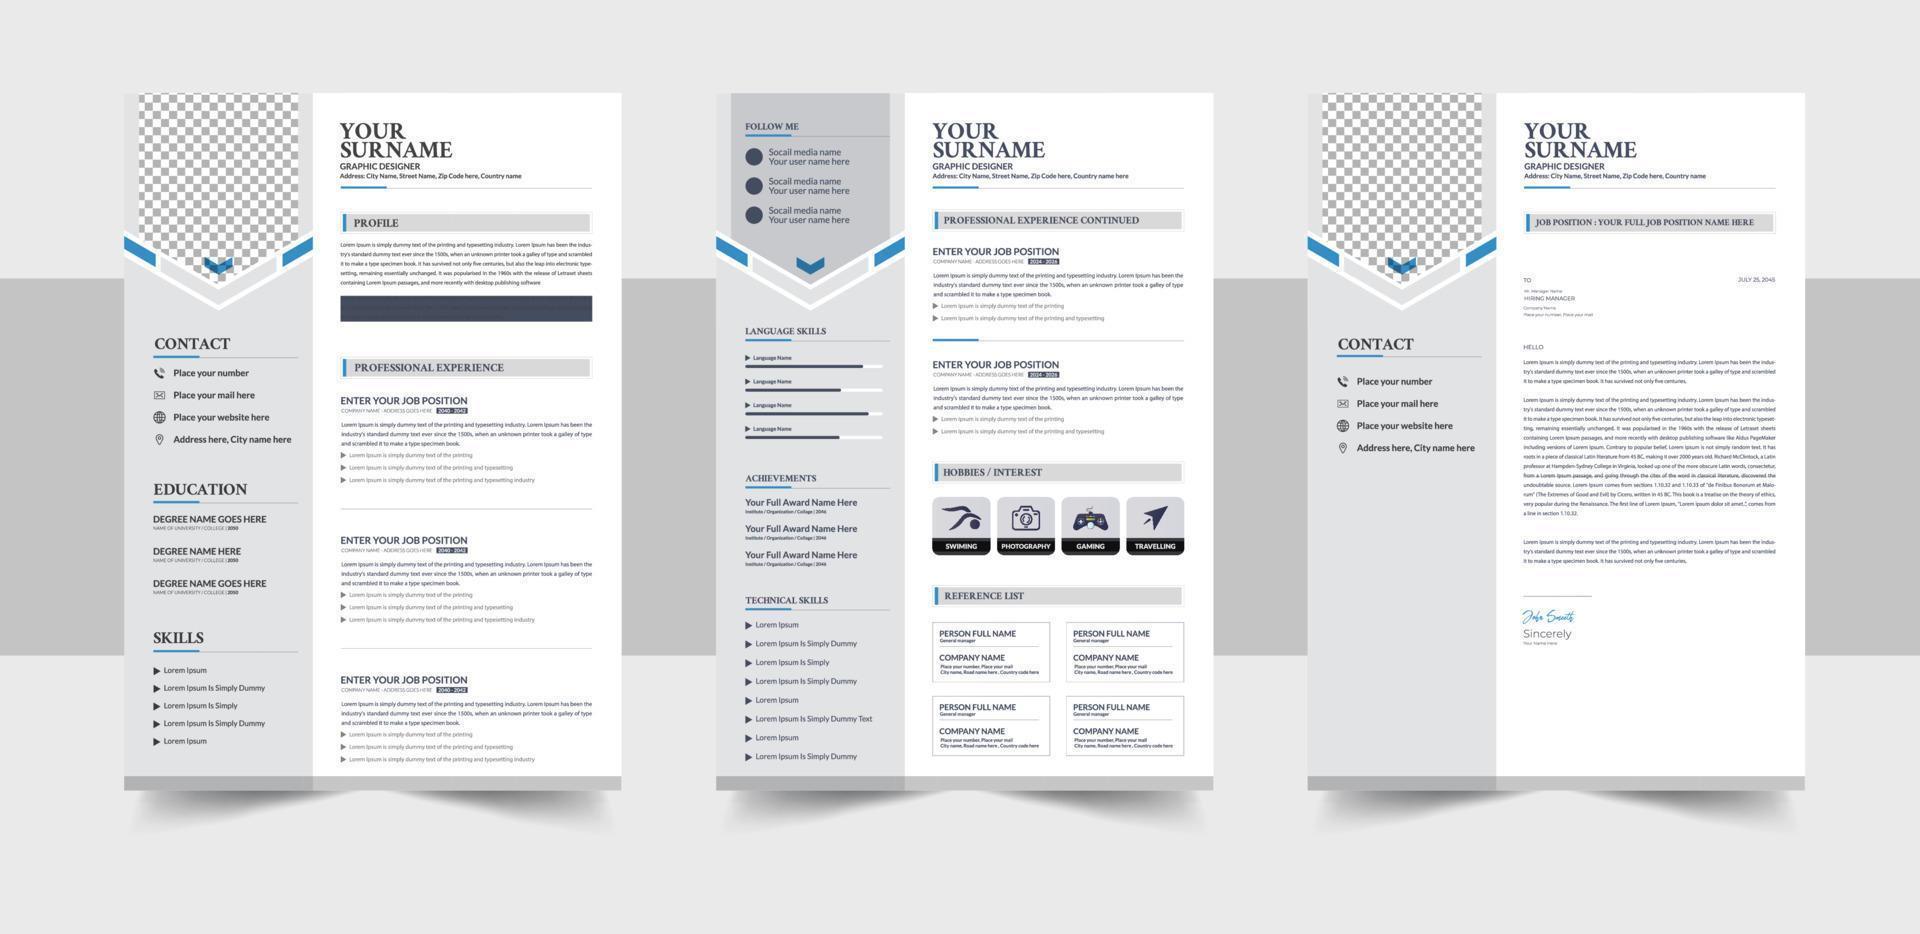 Resume Template Design For Corporate Job Applications, Creative CV resume templates Vector Design cover letter job applications colors, cv design, multipurpose resume design, and premium designs